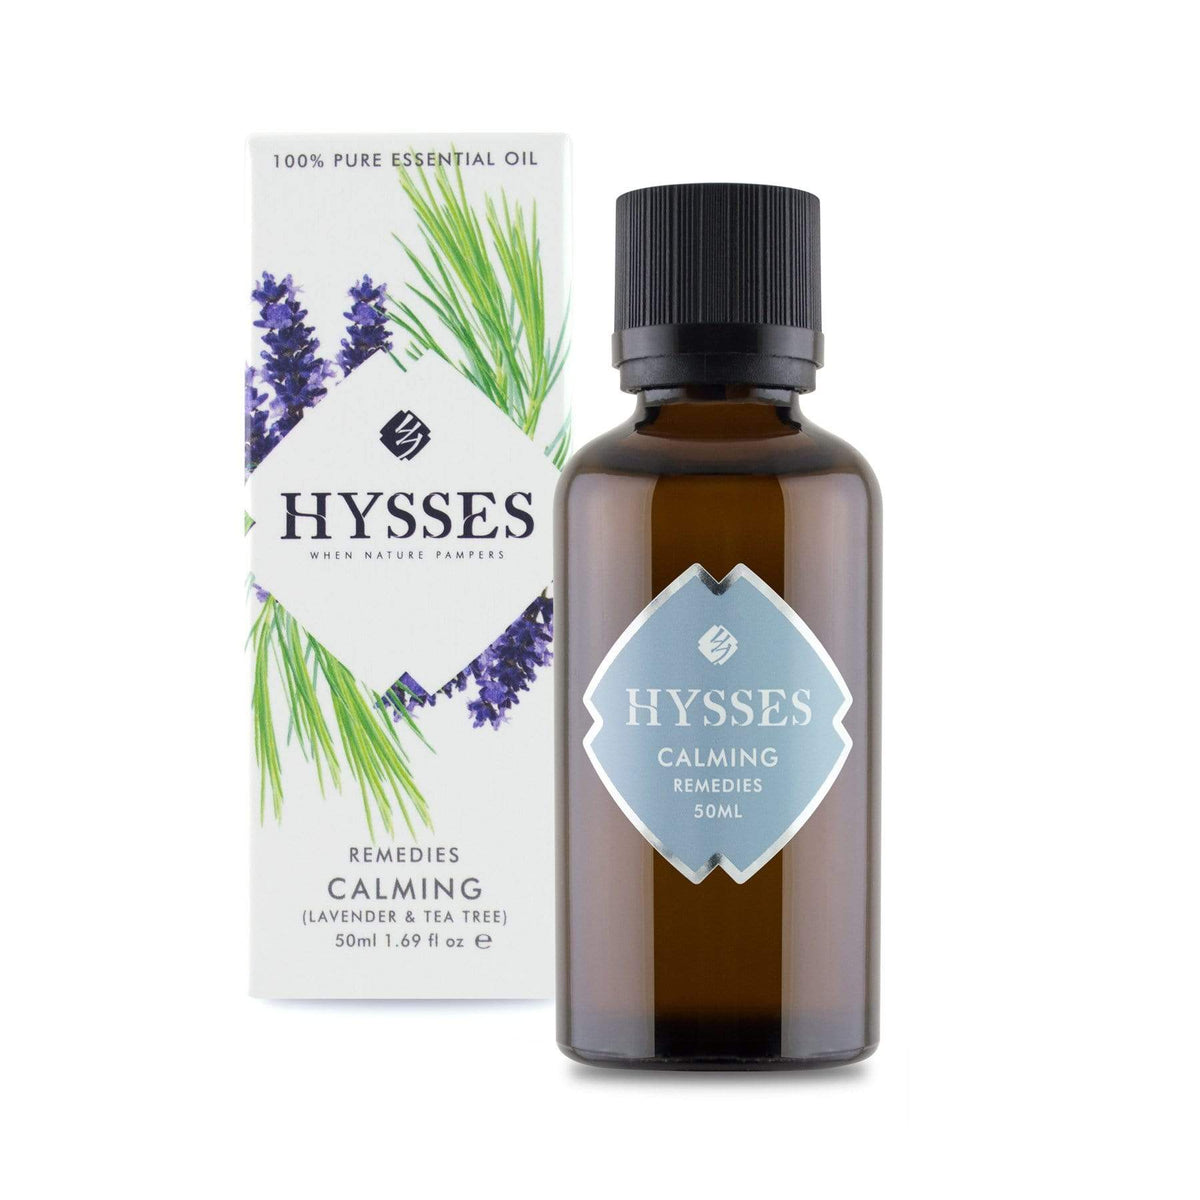 Hysses Essential Oil 50ml Remedies, Calming